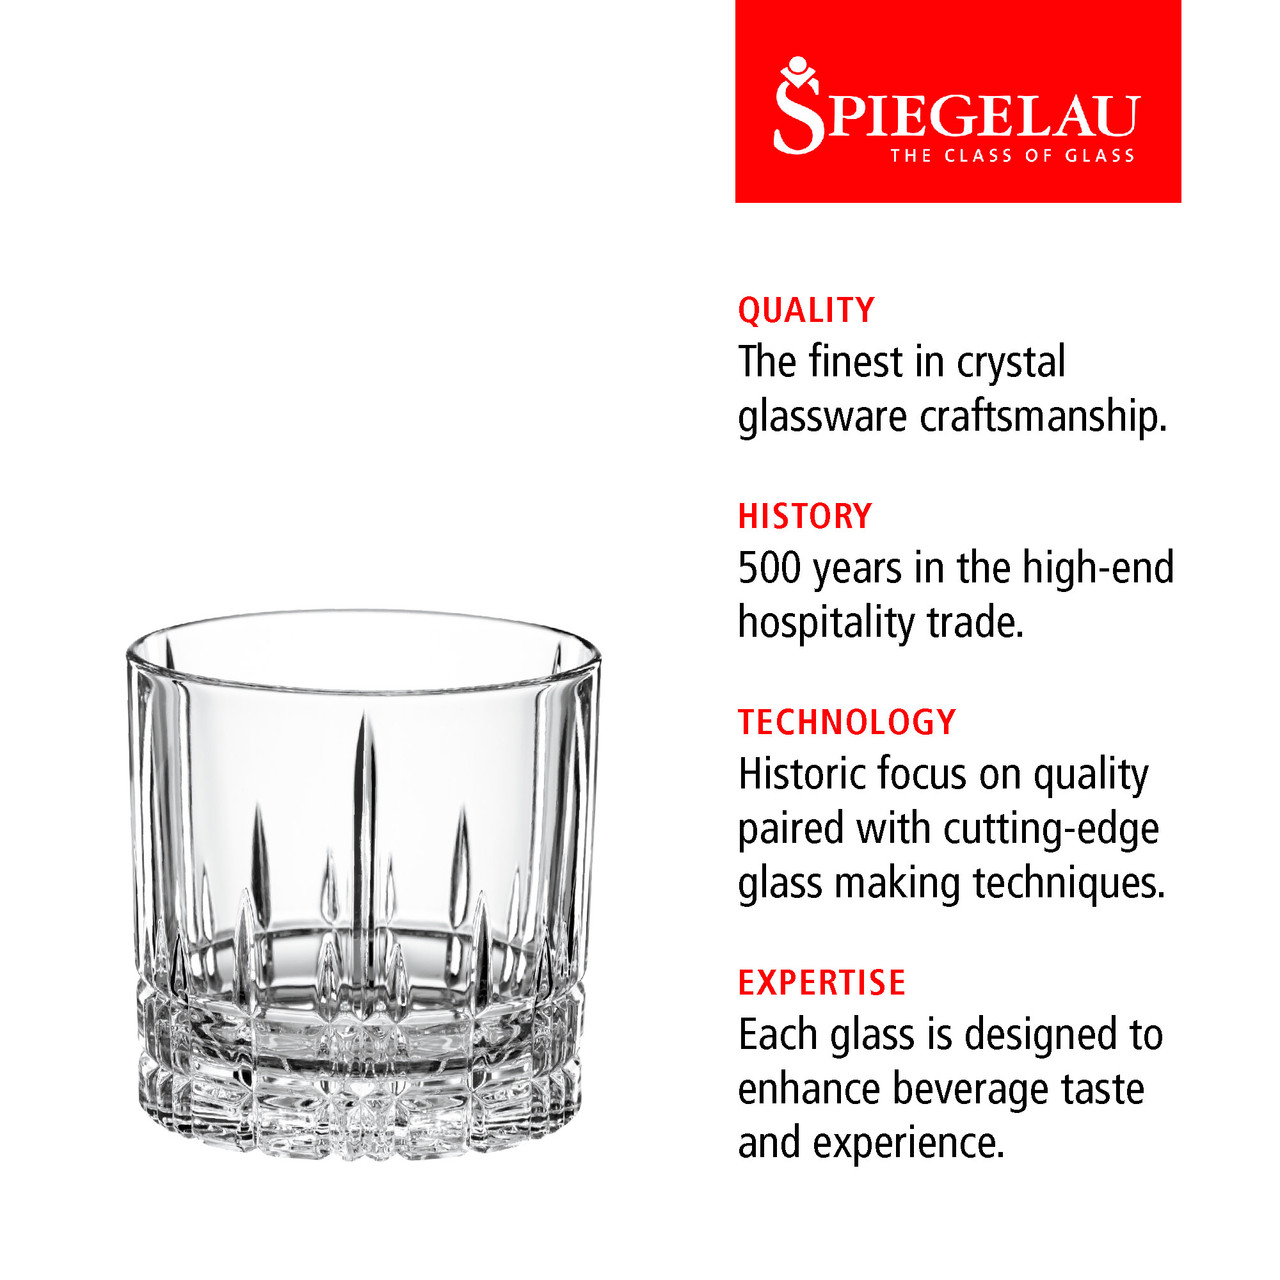 Spiegelau 9.5 oz Perfect S.O.F. glass (set of 4)